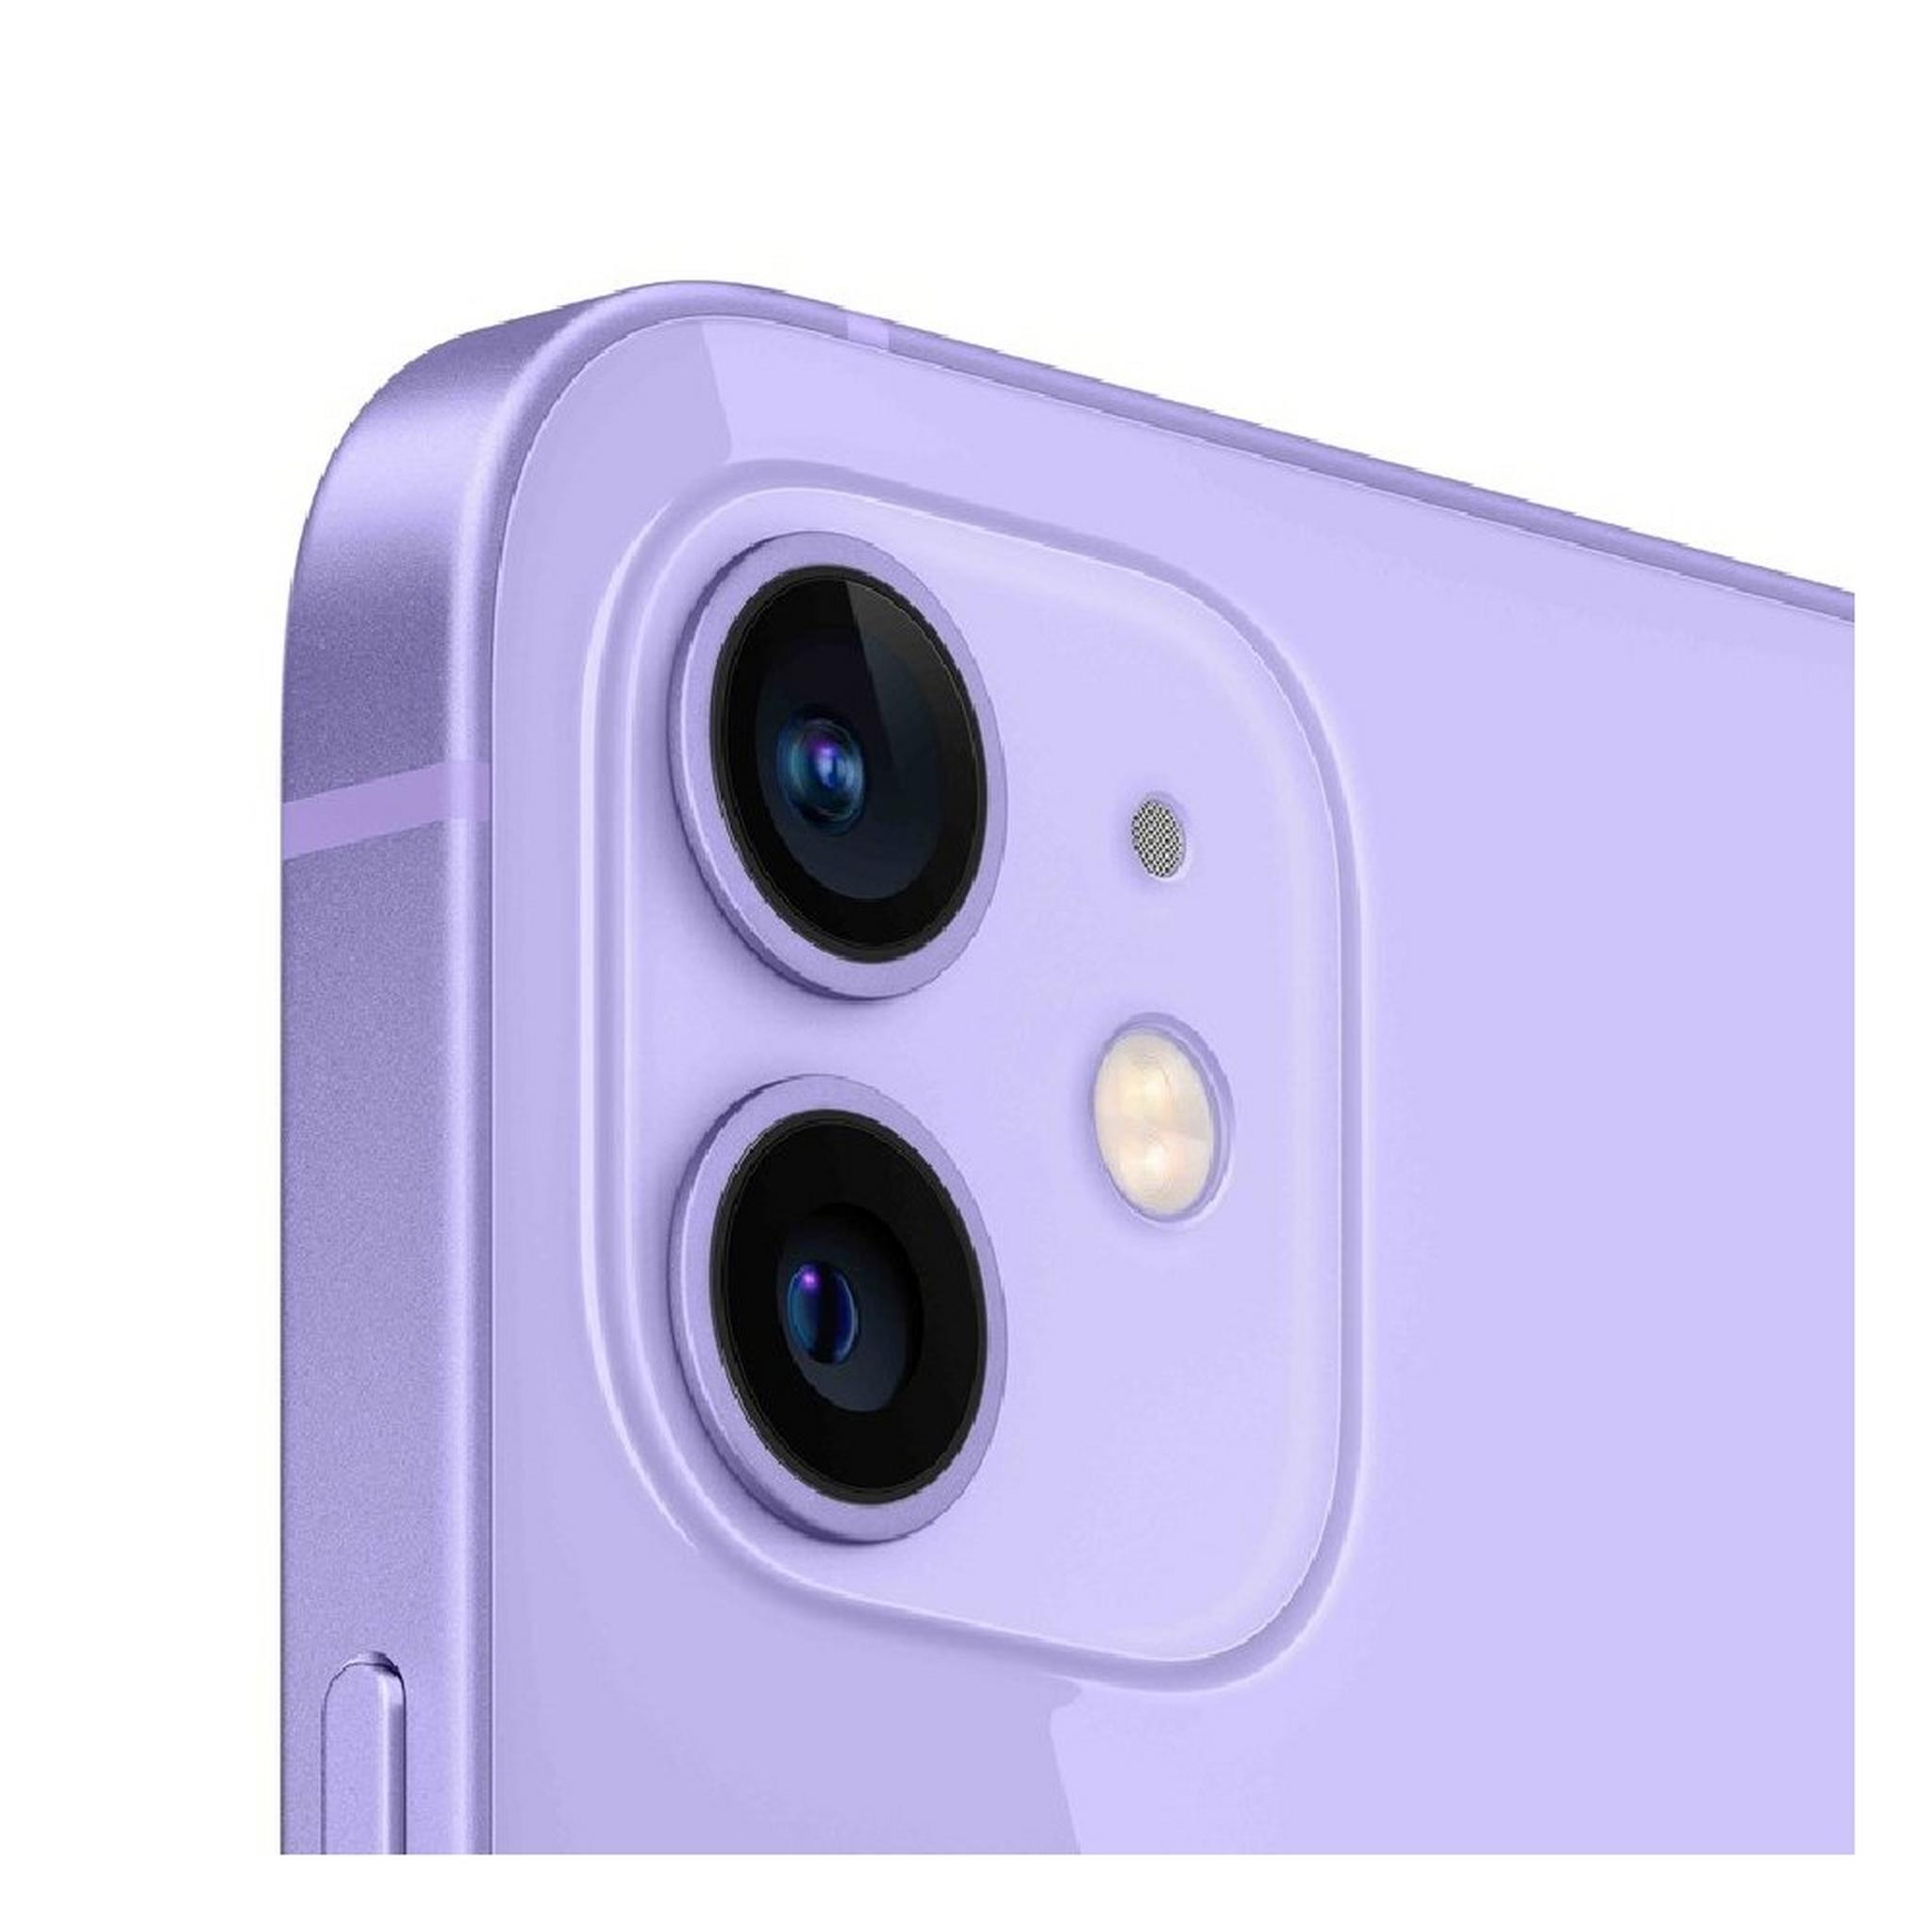 Apple iPhone 12 128GB - Purple